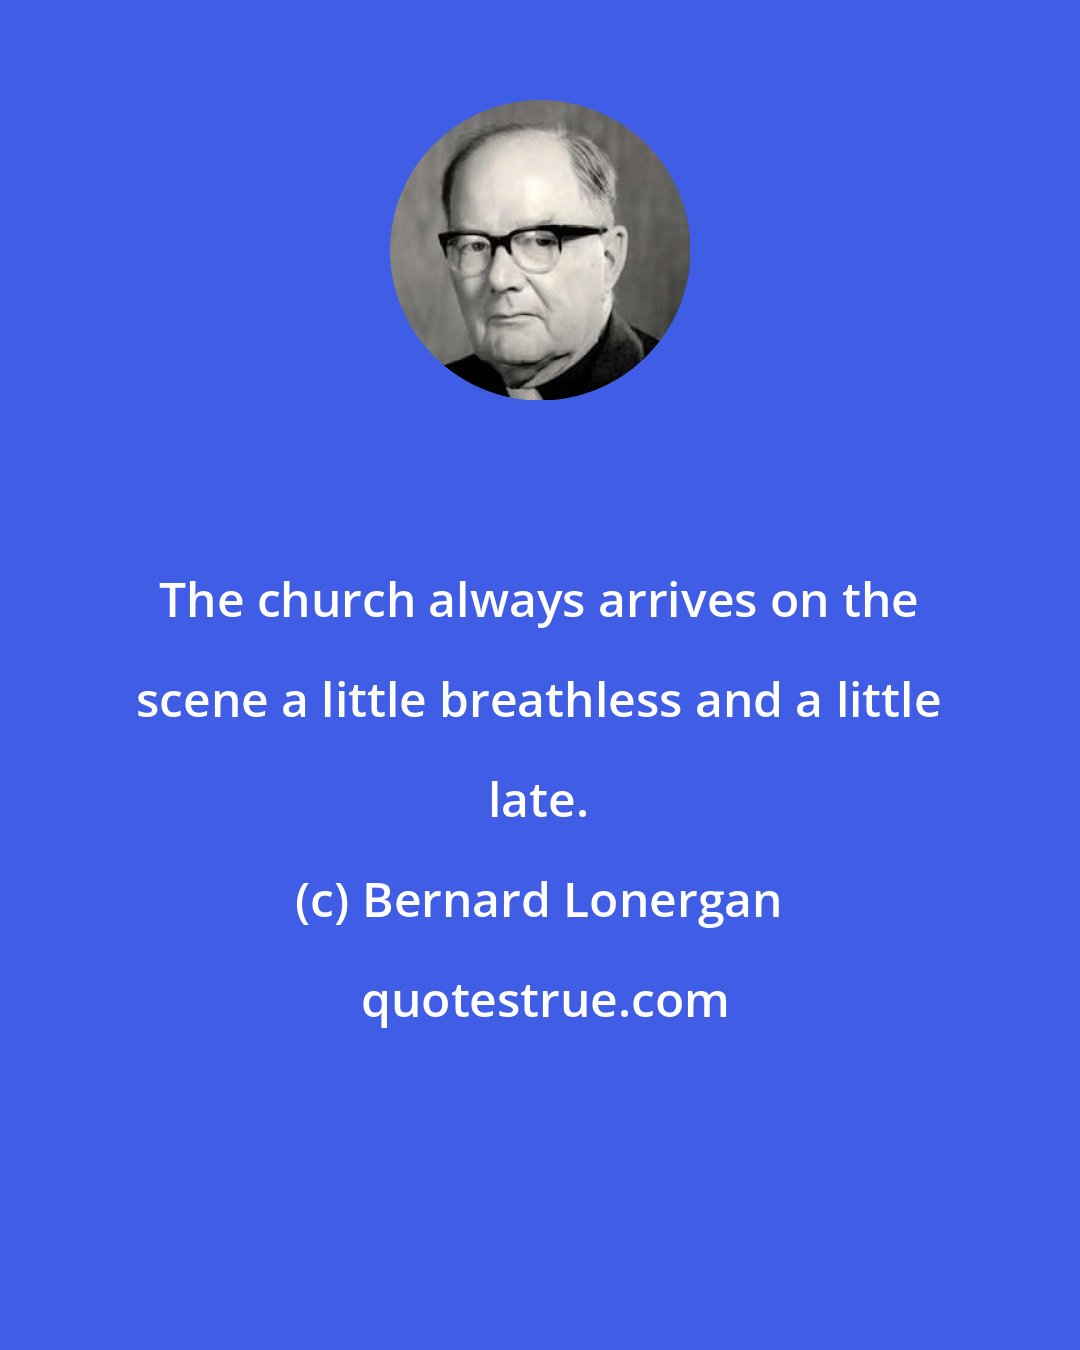 Bernard Lonergan: The church always arrives on the scene a little breathless and a little late.